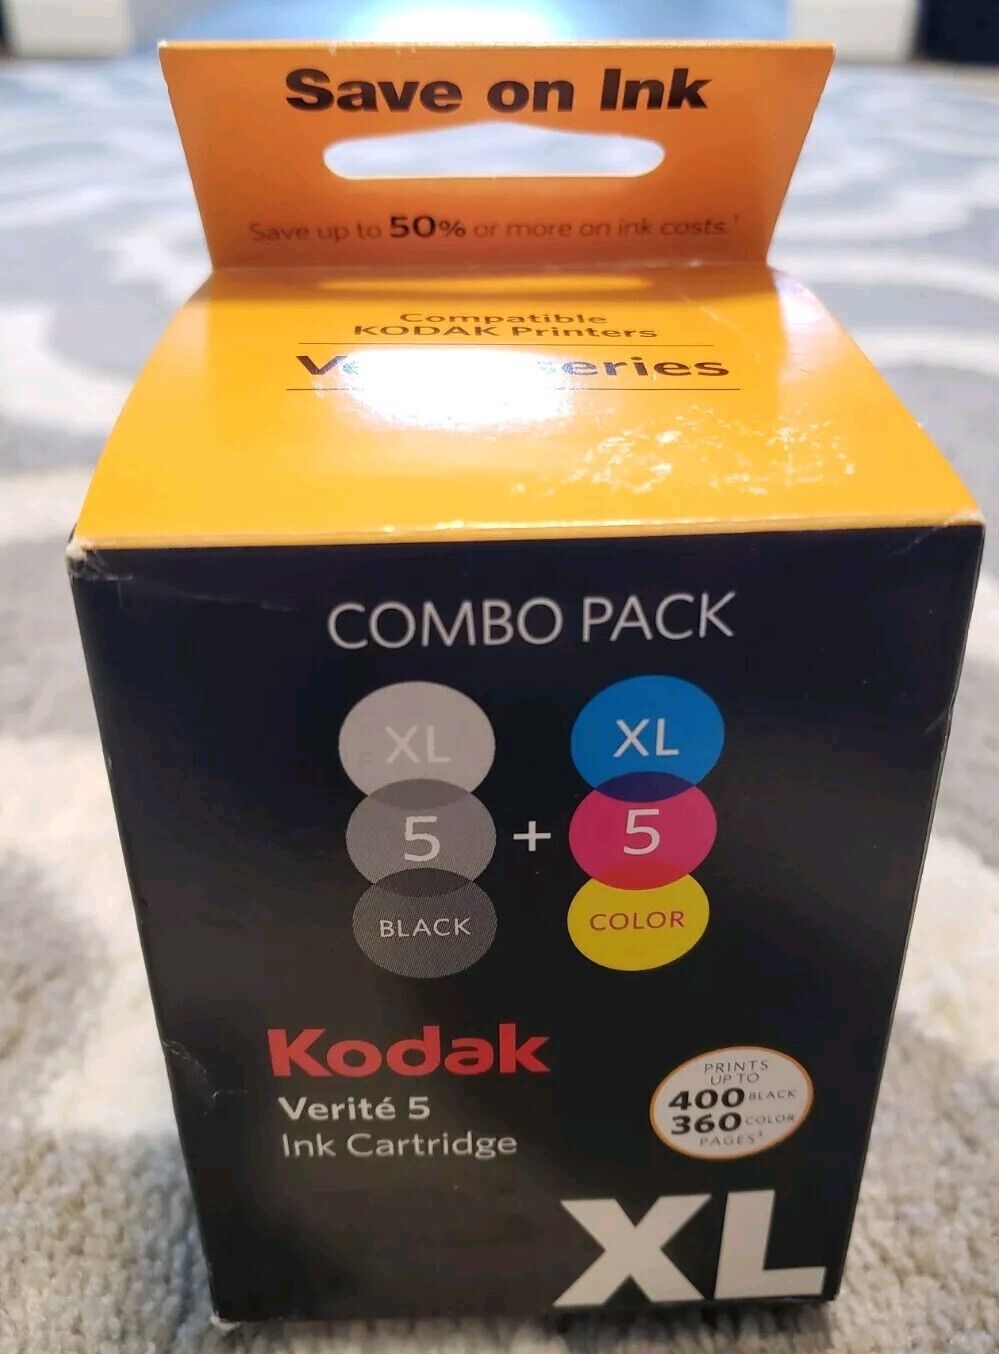 Kodak Verite 5 XL Combo Pack Ink Cartridge Black & Color XL Cartridge Open Box